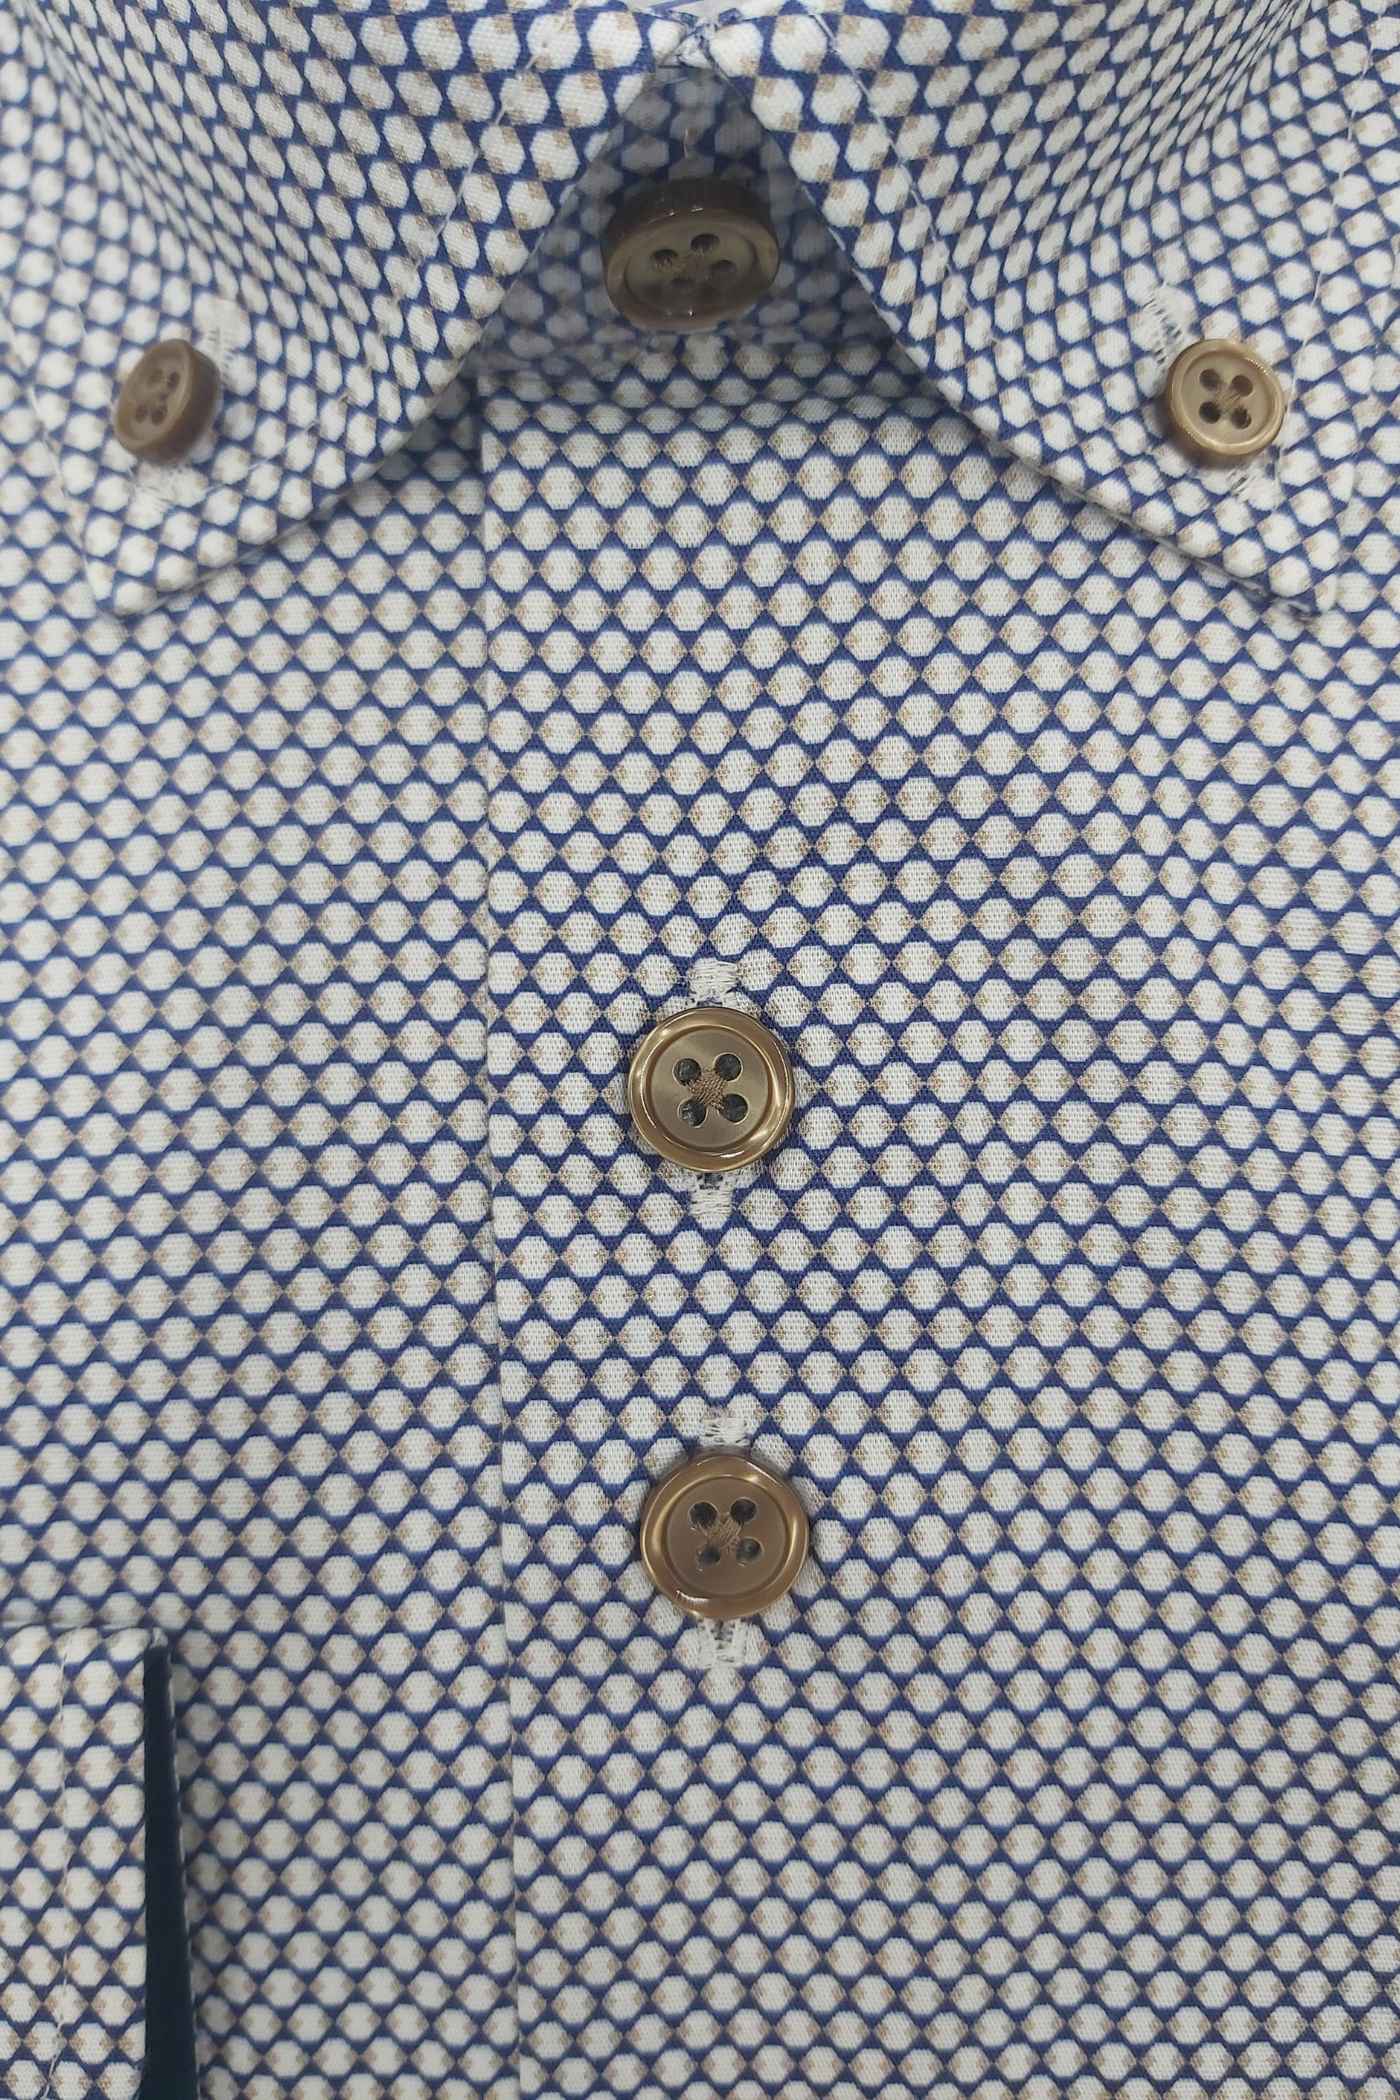 Men's Button Down Navy/White/Gold Circle Print Shirt-Close Up